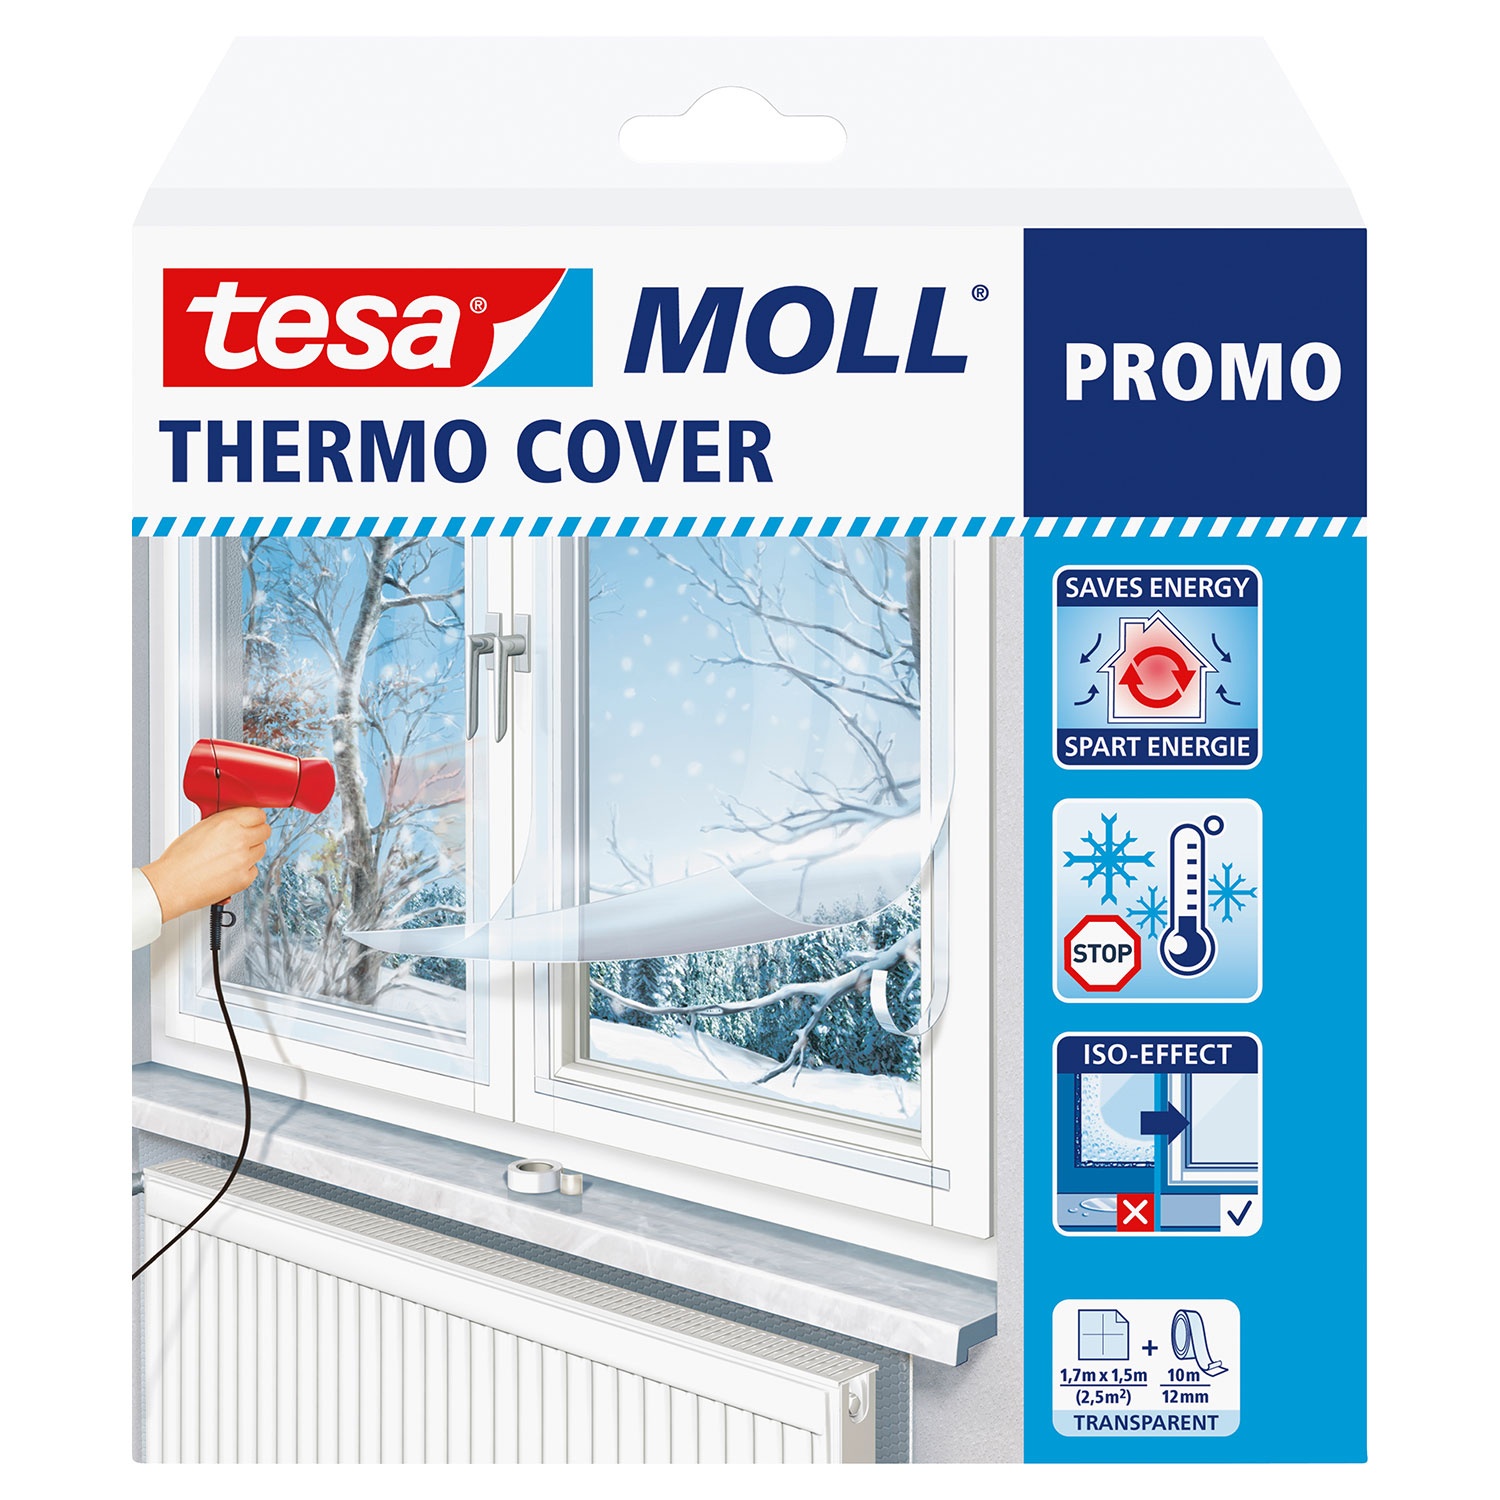 NEU 2 x tesa MOLL Thermo Cover ISO Effekt Fenster Isolierfolie in